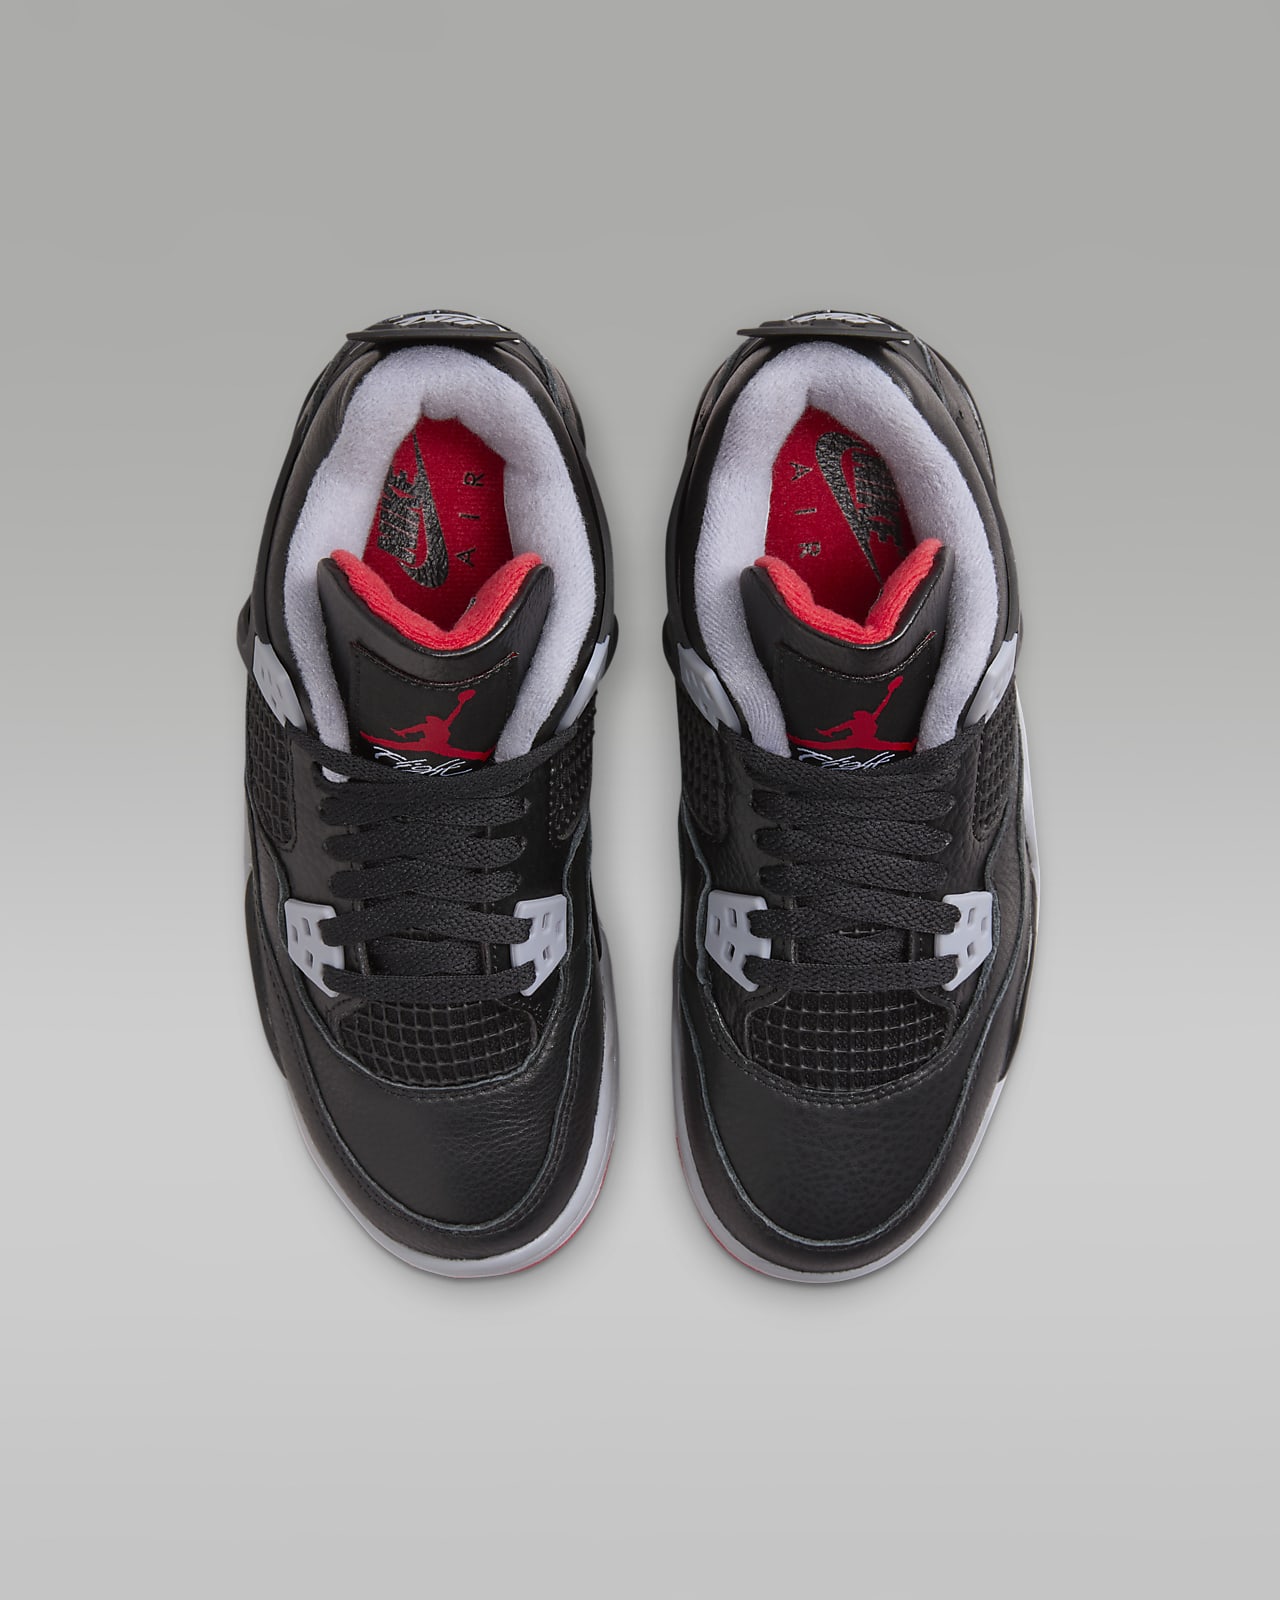 Nike Air Jordan 4 Retro Bred Reimagined | www.150.illinois.edu